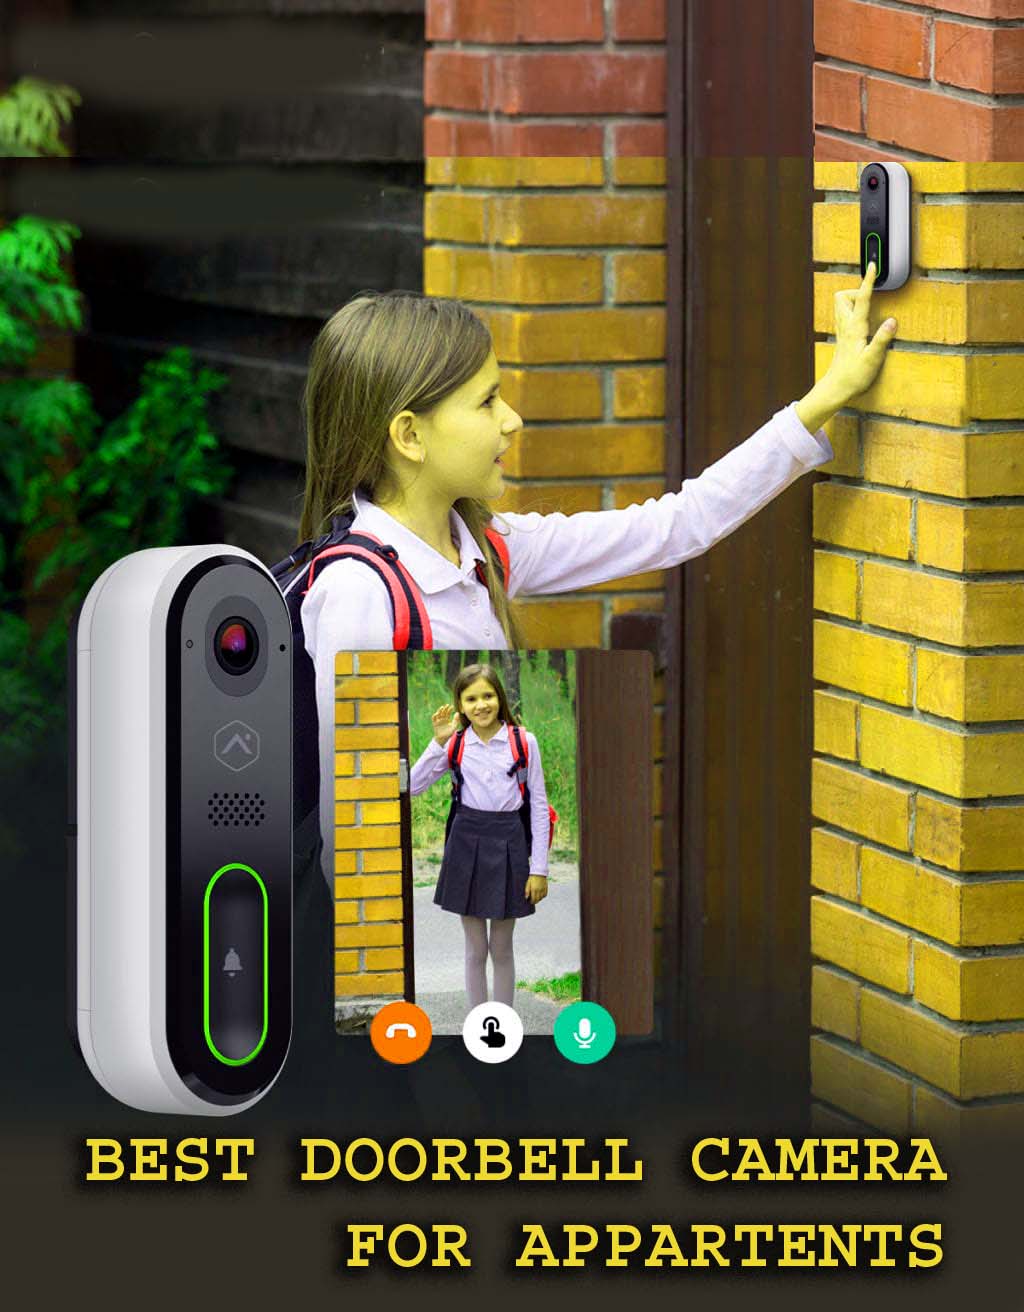 Best Doorbell Camera for Apartment